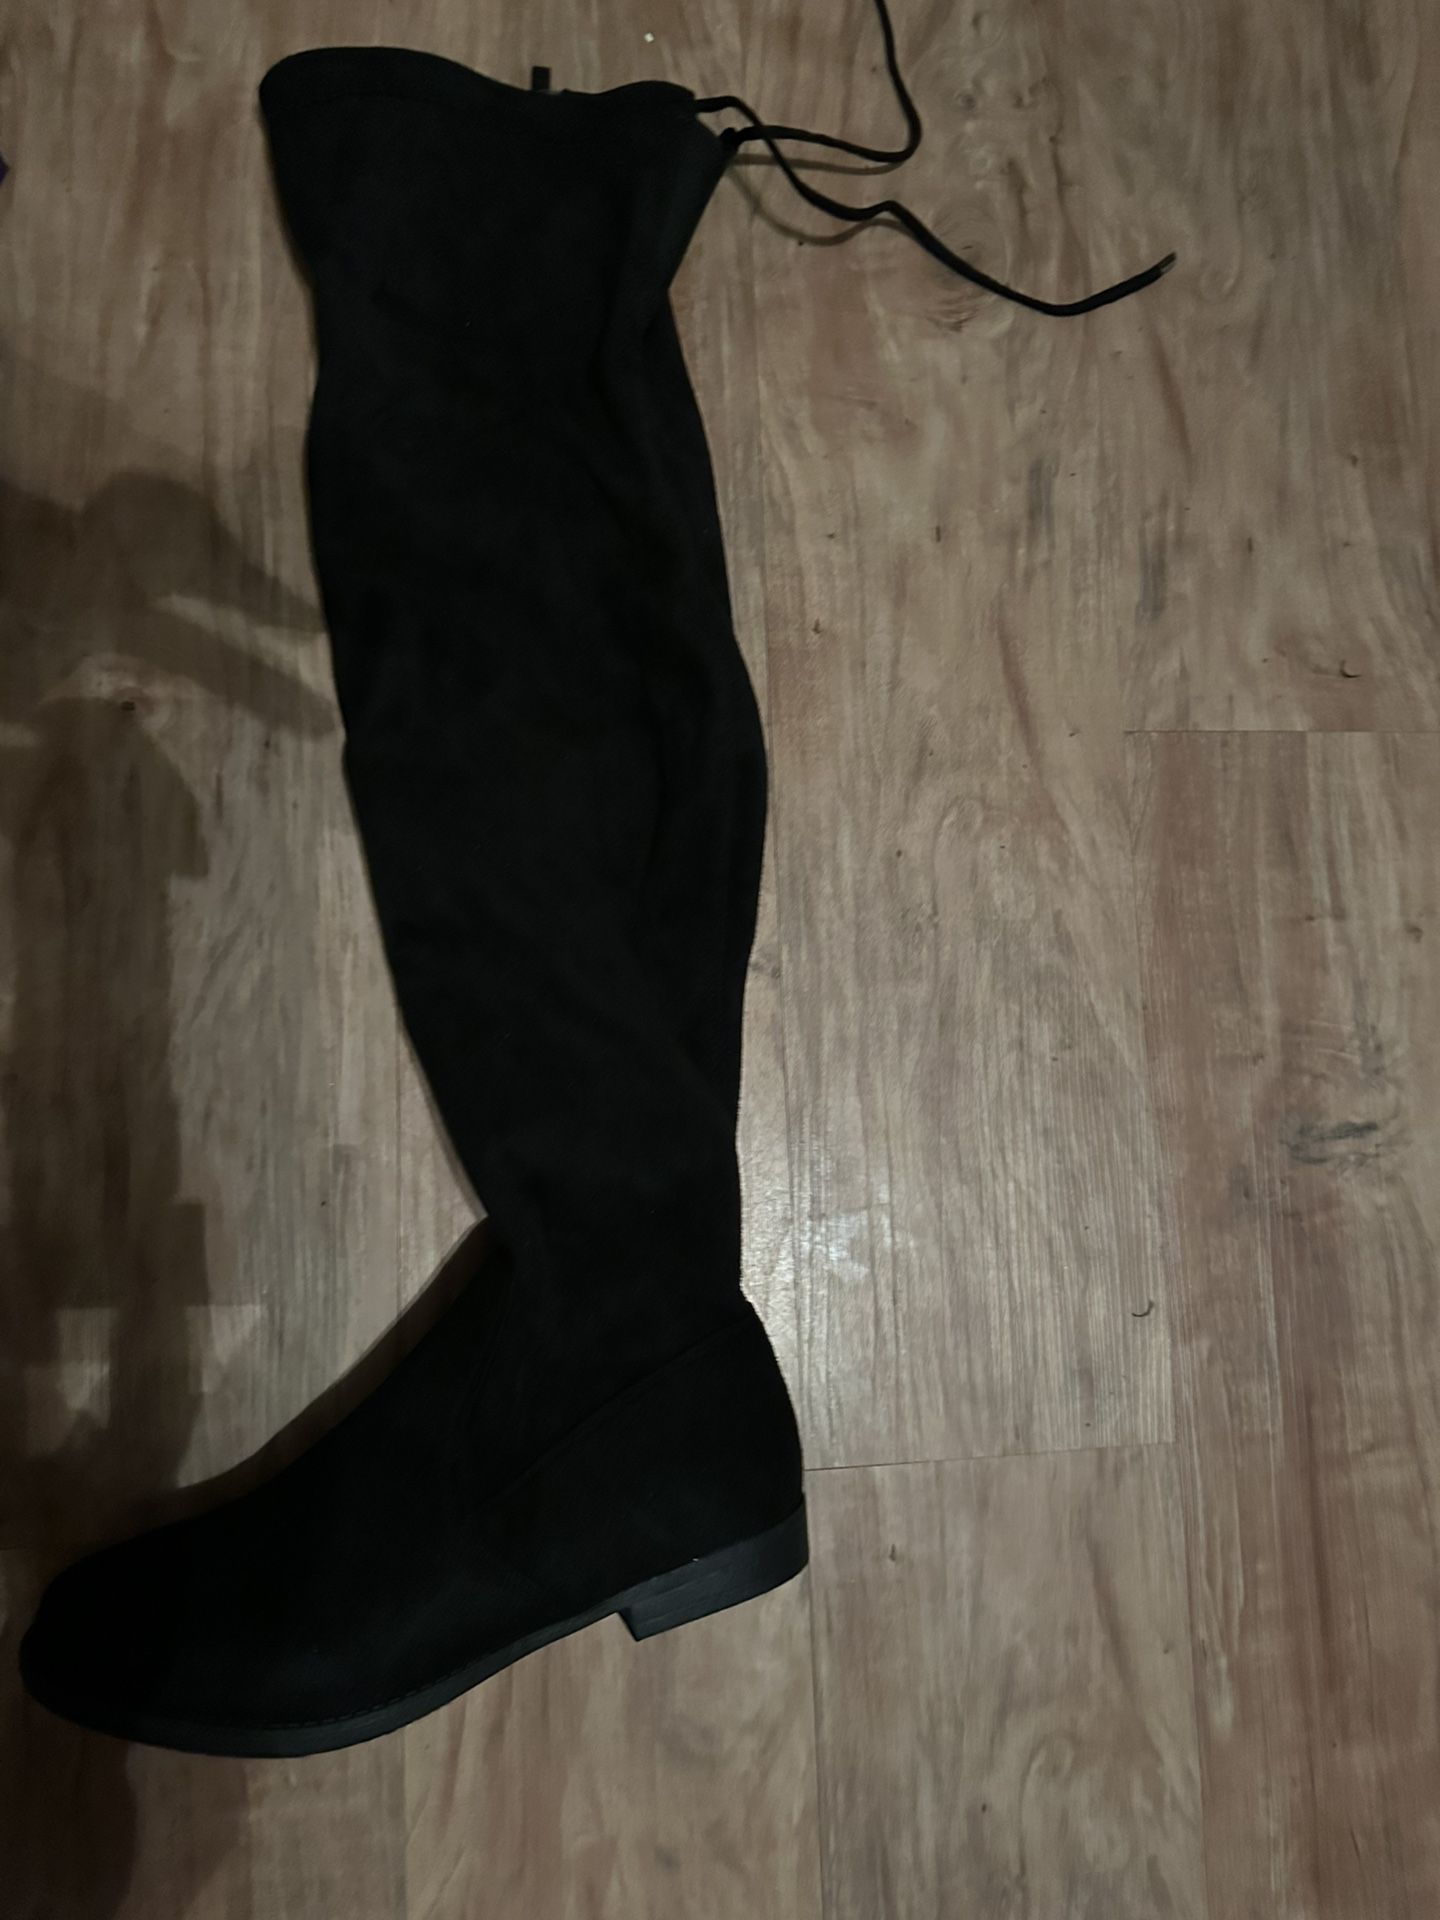 Top Moda Black Boots 